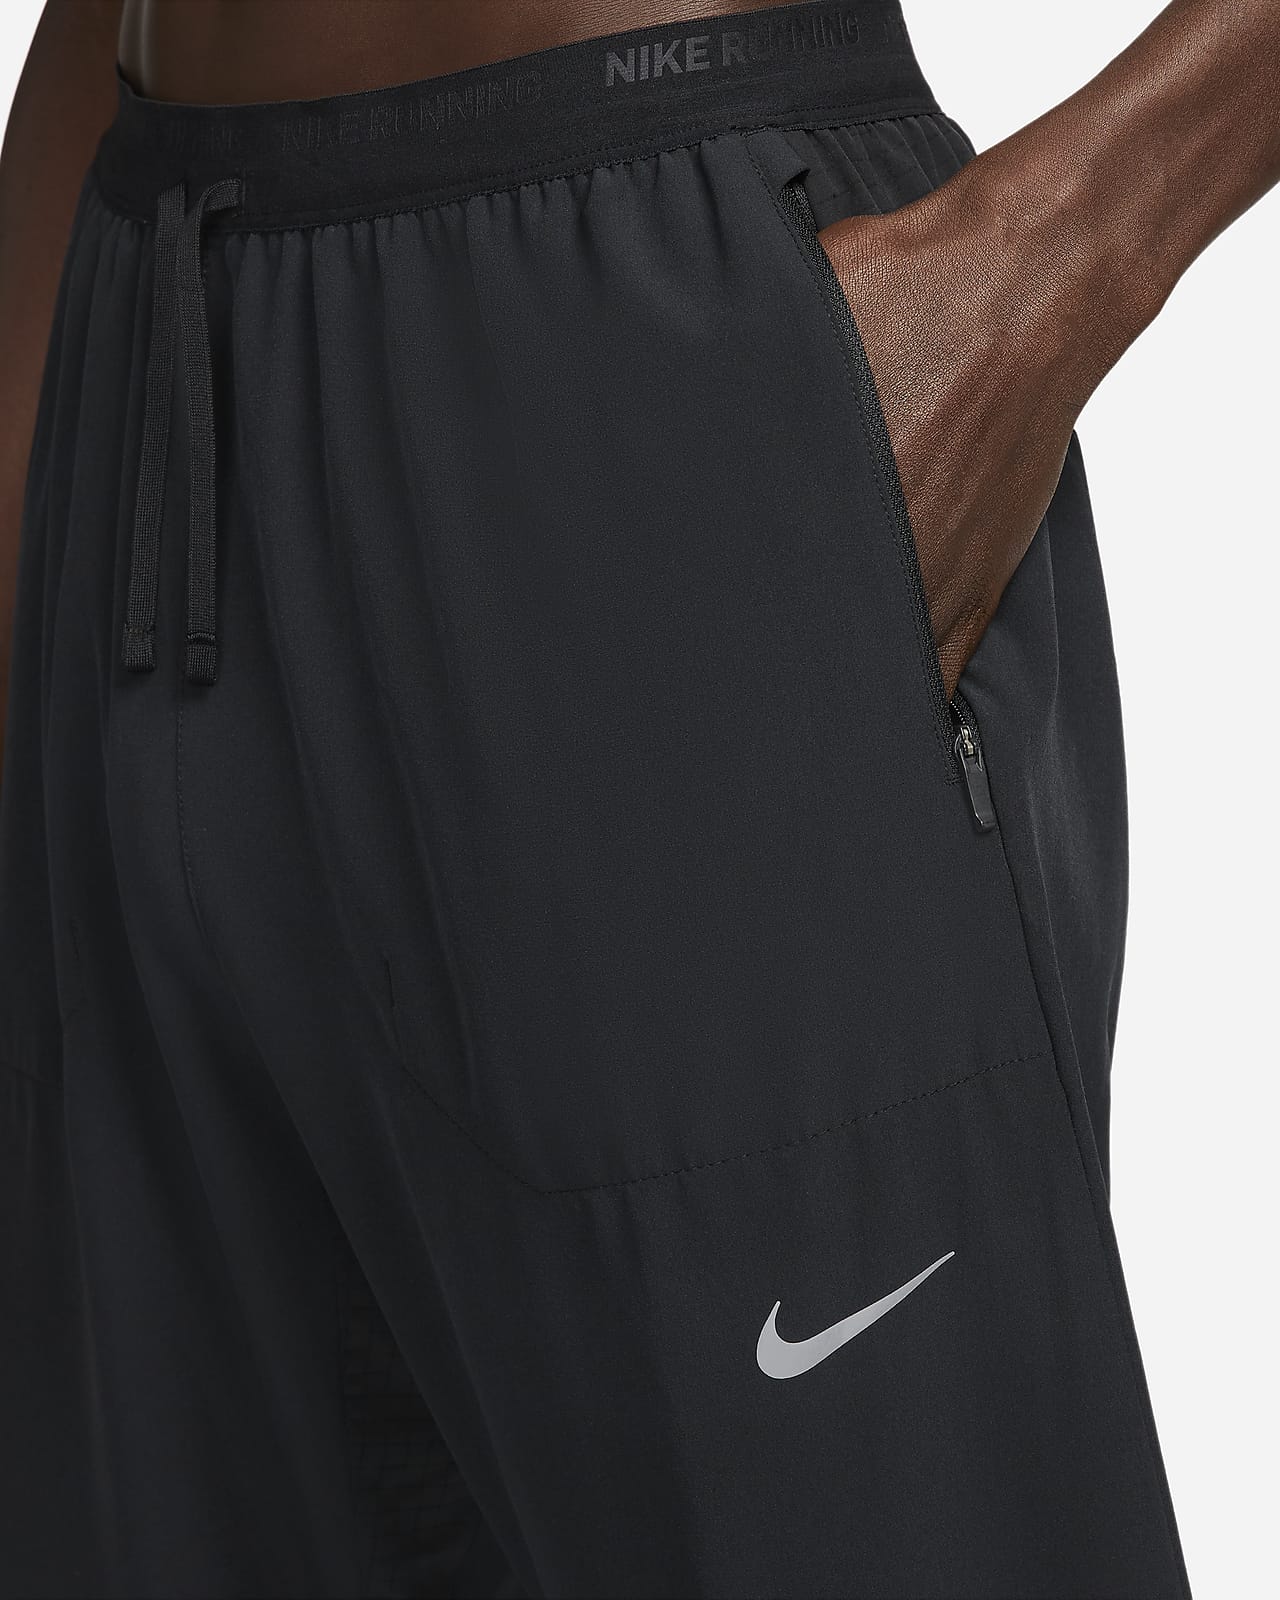 Amazon.com: Nike Men's Therma Training Pants (Small, Black/MTLC Hematite) :  Clothing, Shoes & Jewelry